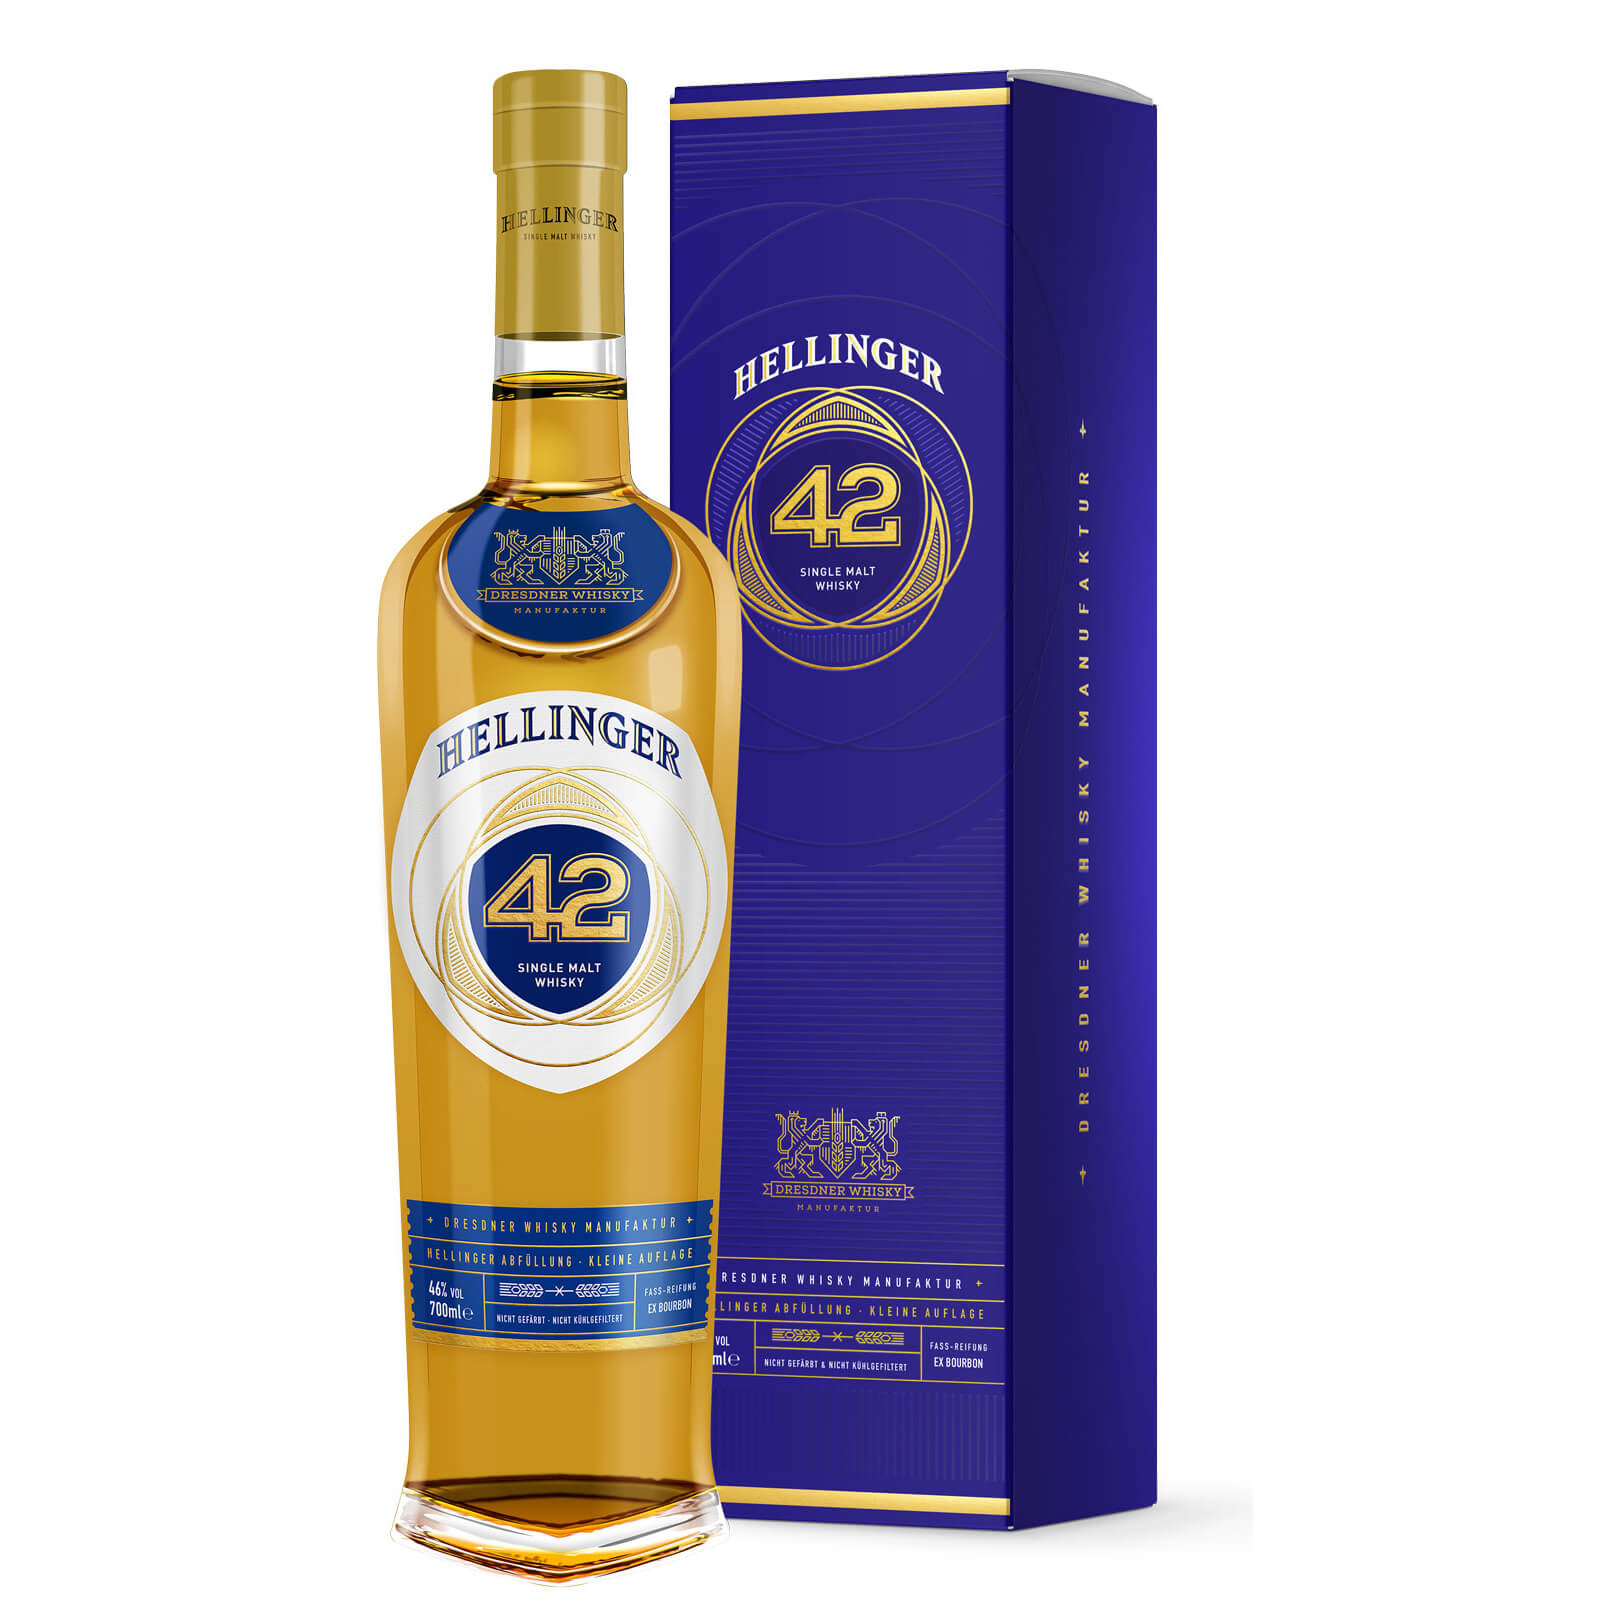 dresdner-whisky-manufaktur-bottle-hellinger-42